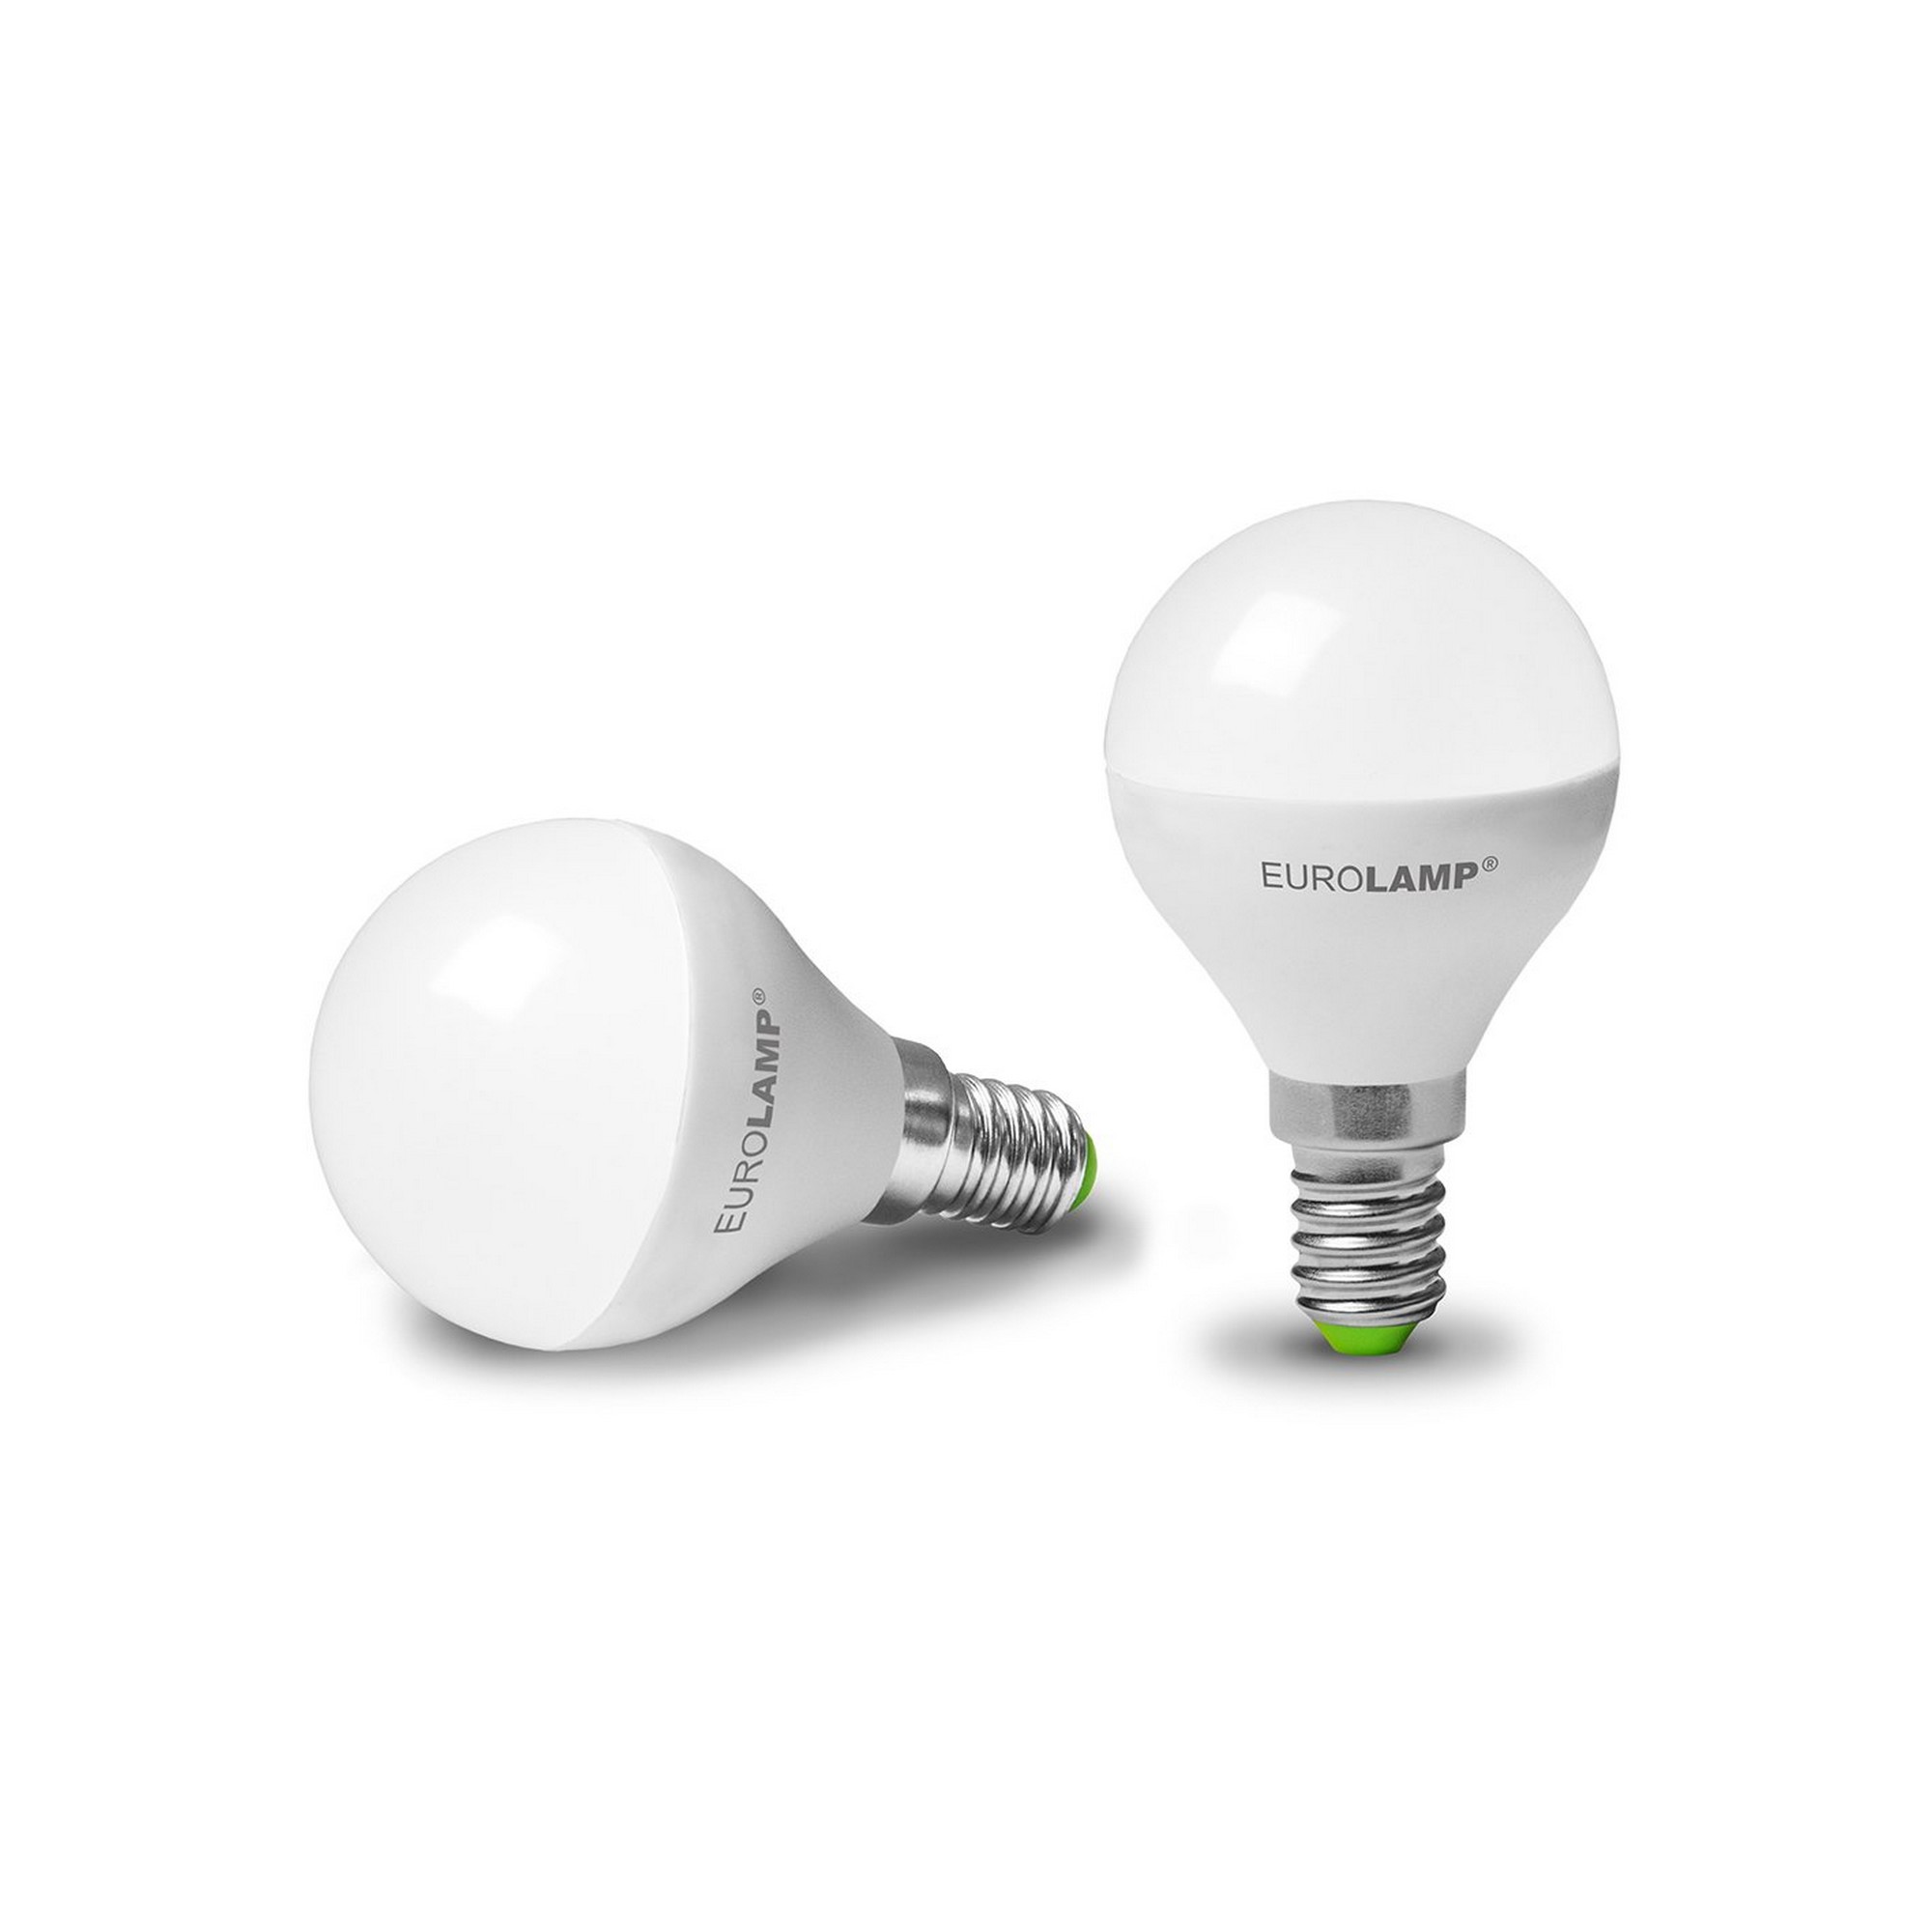 Лампа Eurolamp LED EKO G 45 5W E14 4000K акция "1+1" цена 0.00 грн - фотография 2